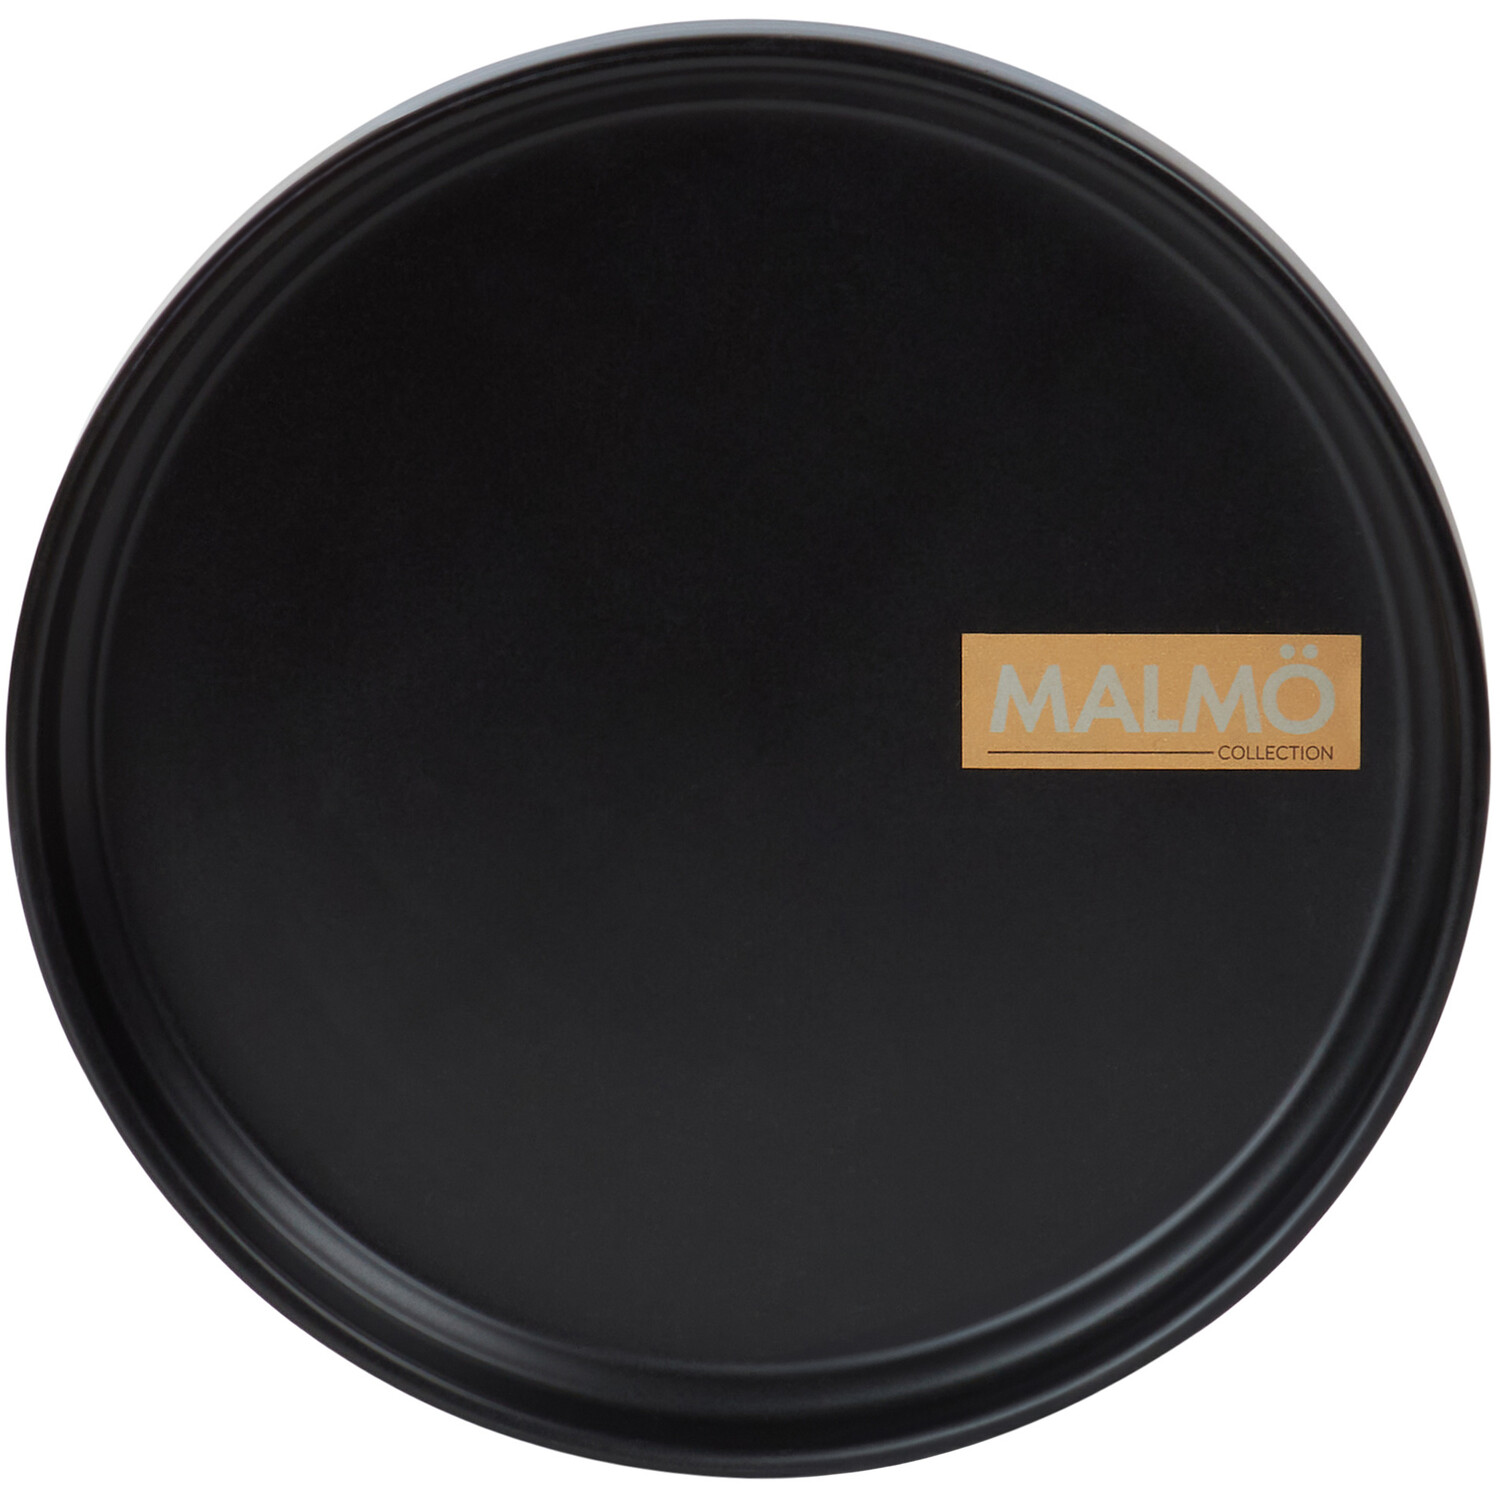 Malmo Stacking Side Plate - Black Image 2